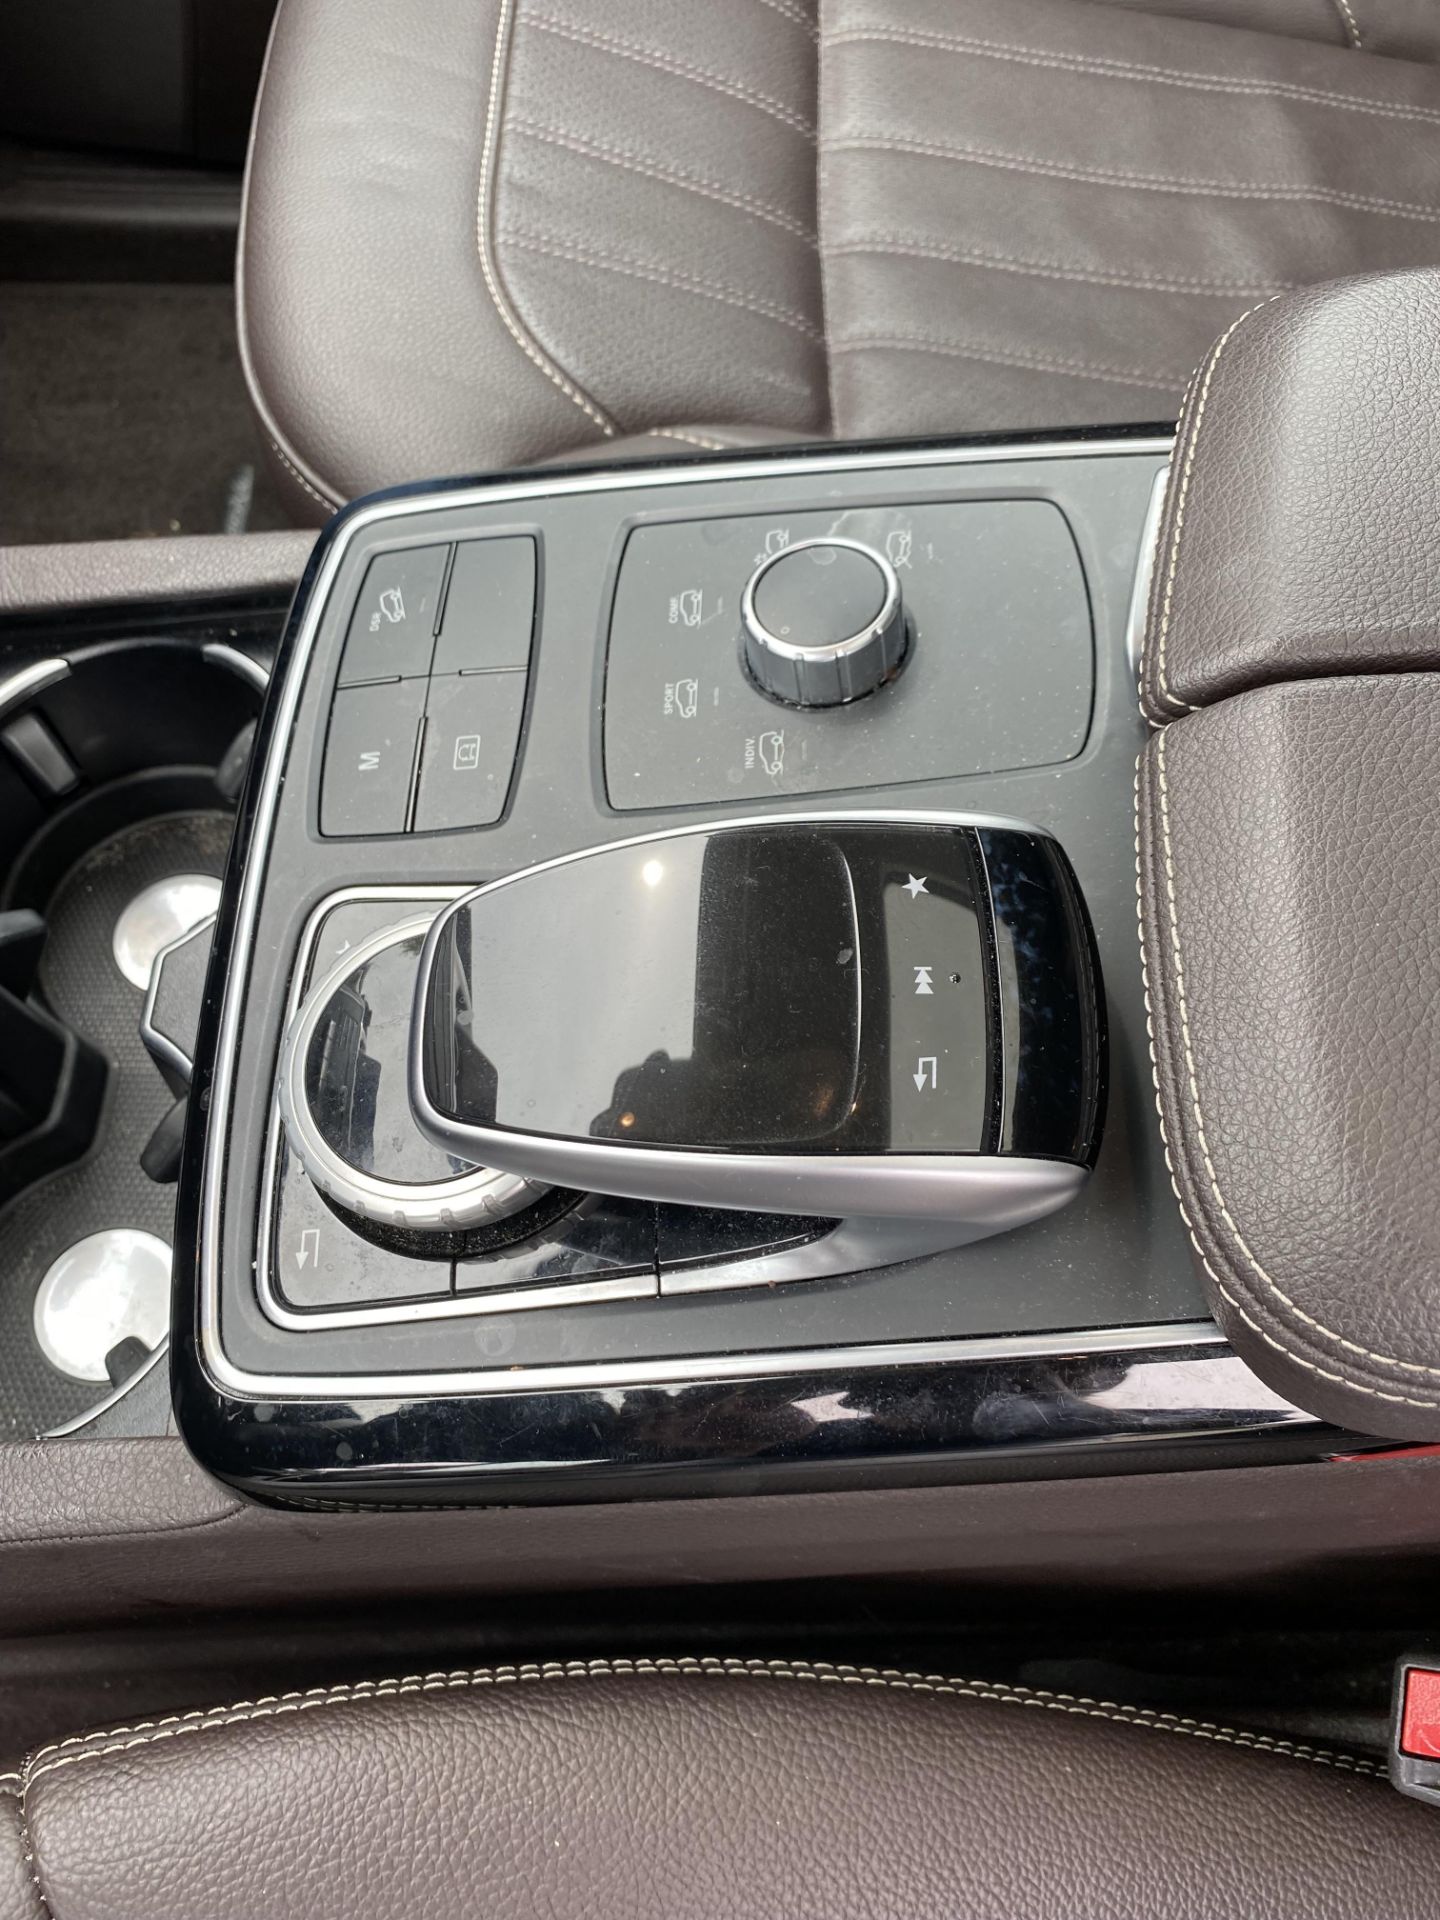 2018 Mercedes Benz GLE350, Odom: 52,420, VIN#: 4JGDA5HBXJB144786, Leather Interior, Power - Image 16 of 19